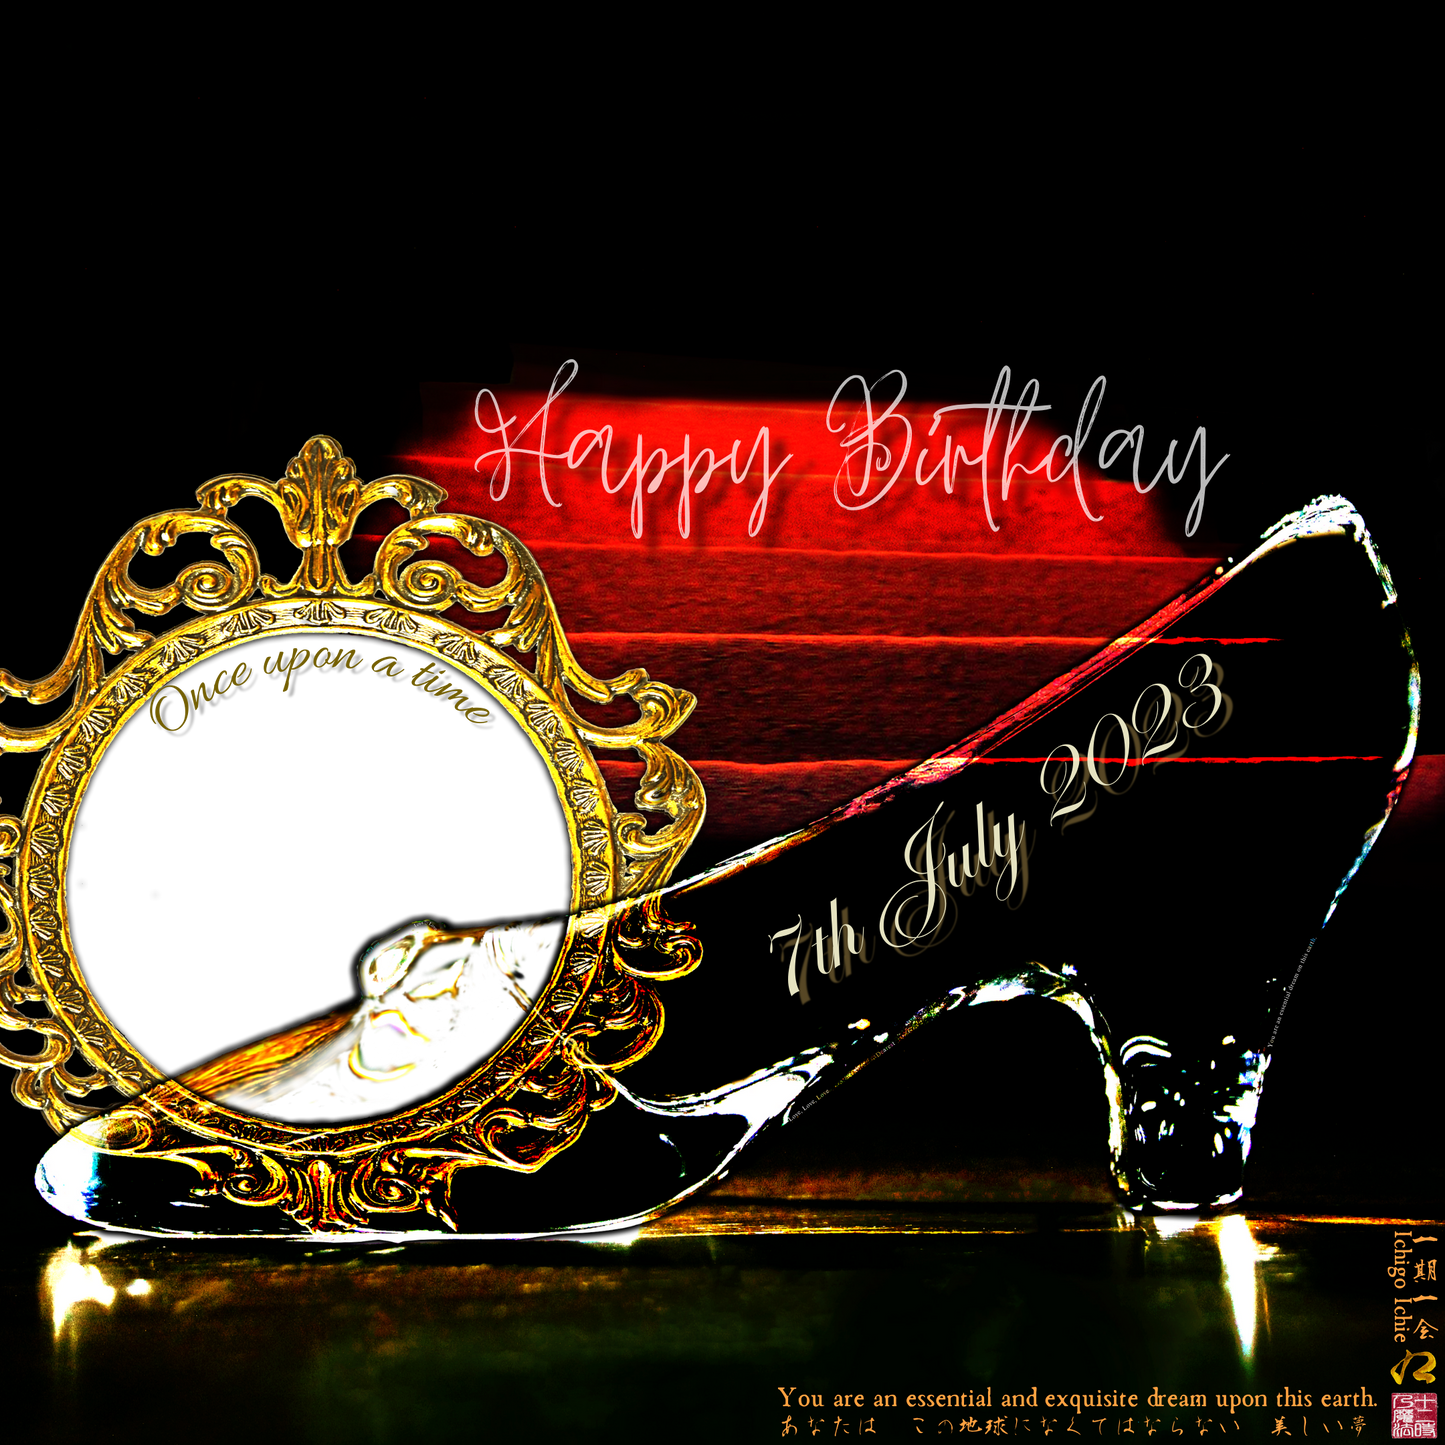 Happy Birthday Glass Slipper "Ichigo Ichie" 7th July 2023 the Left (1-of-1) NFT Art